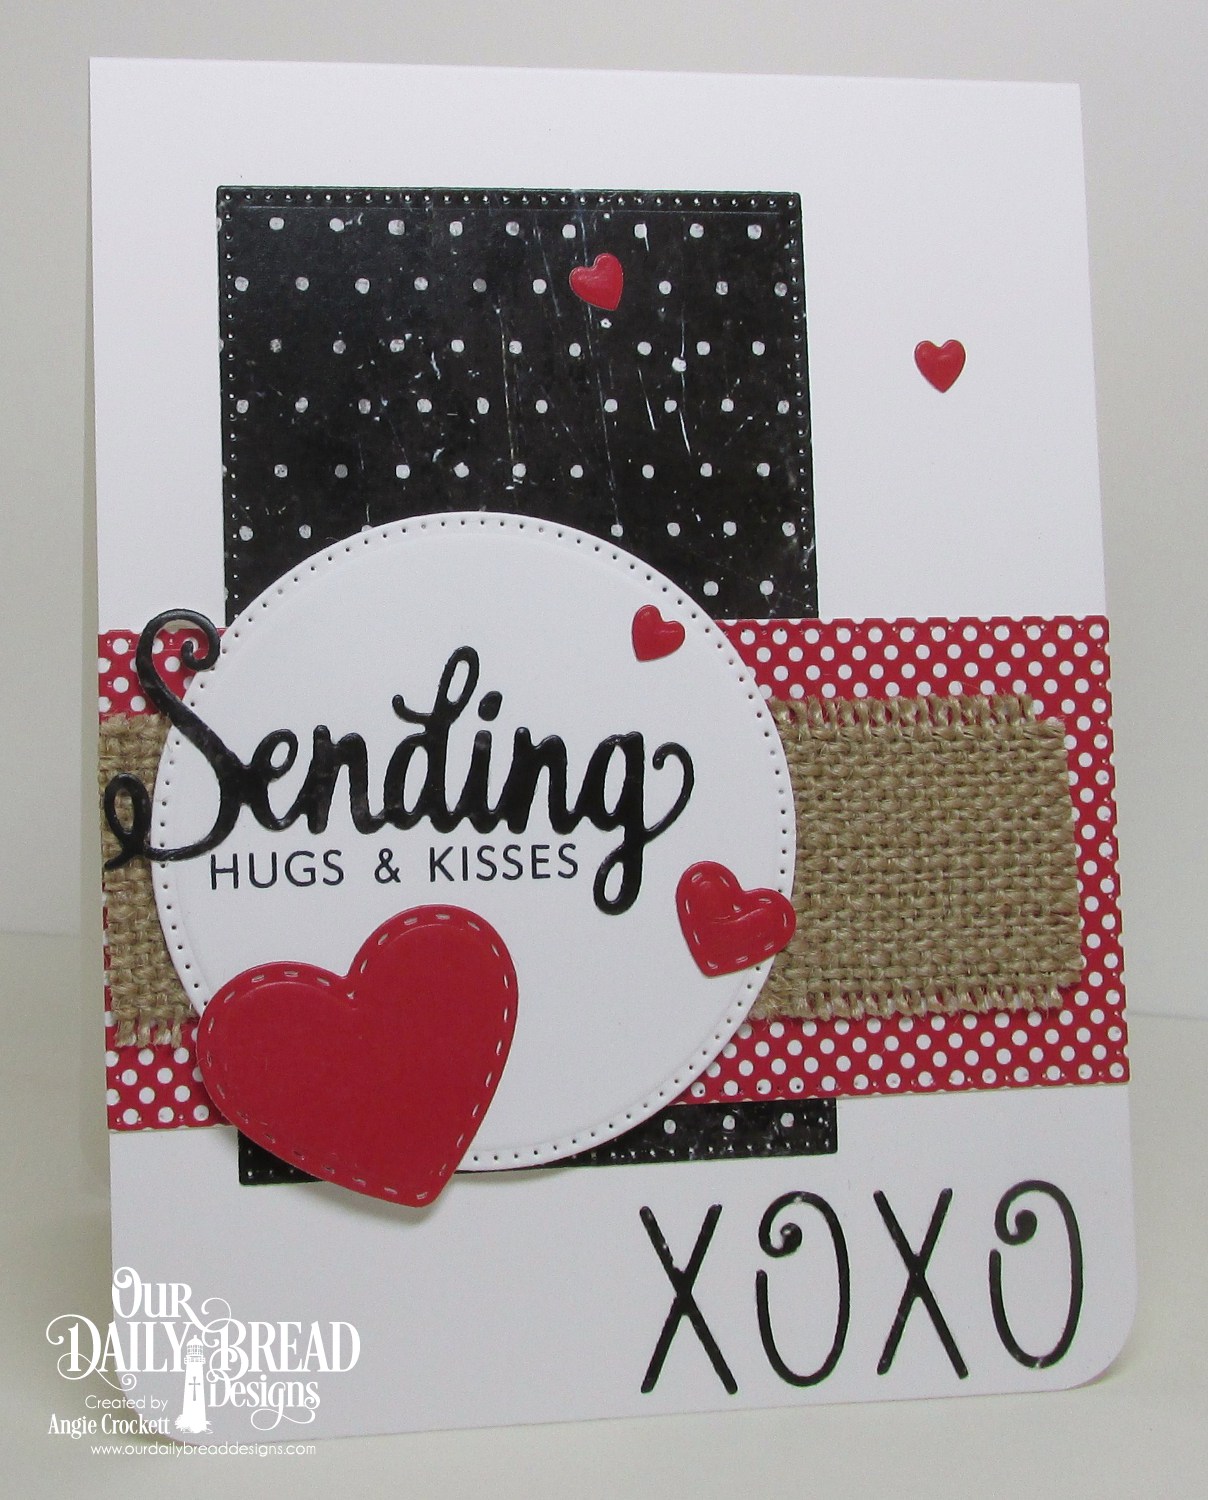 Sending Hugs and Kisses! 